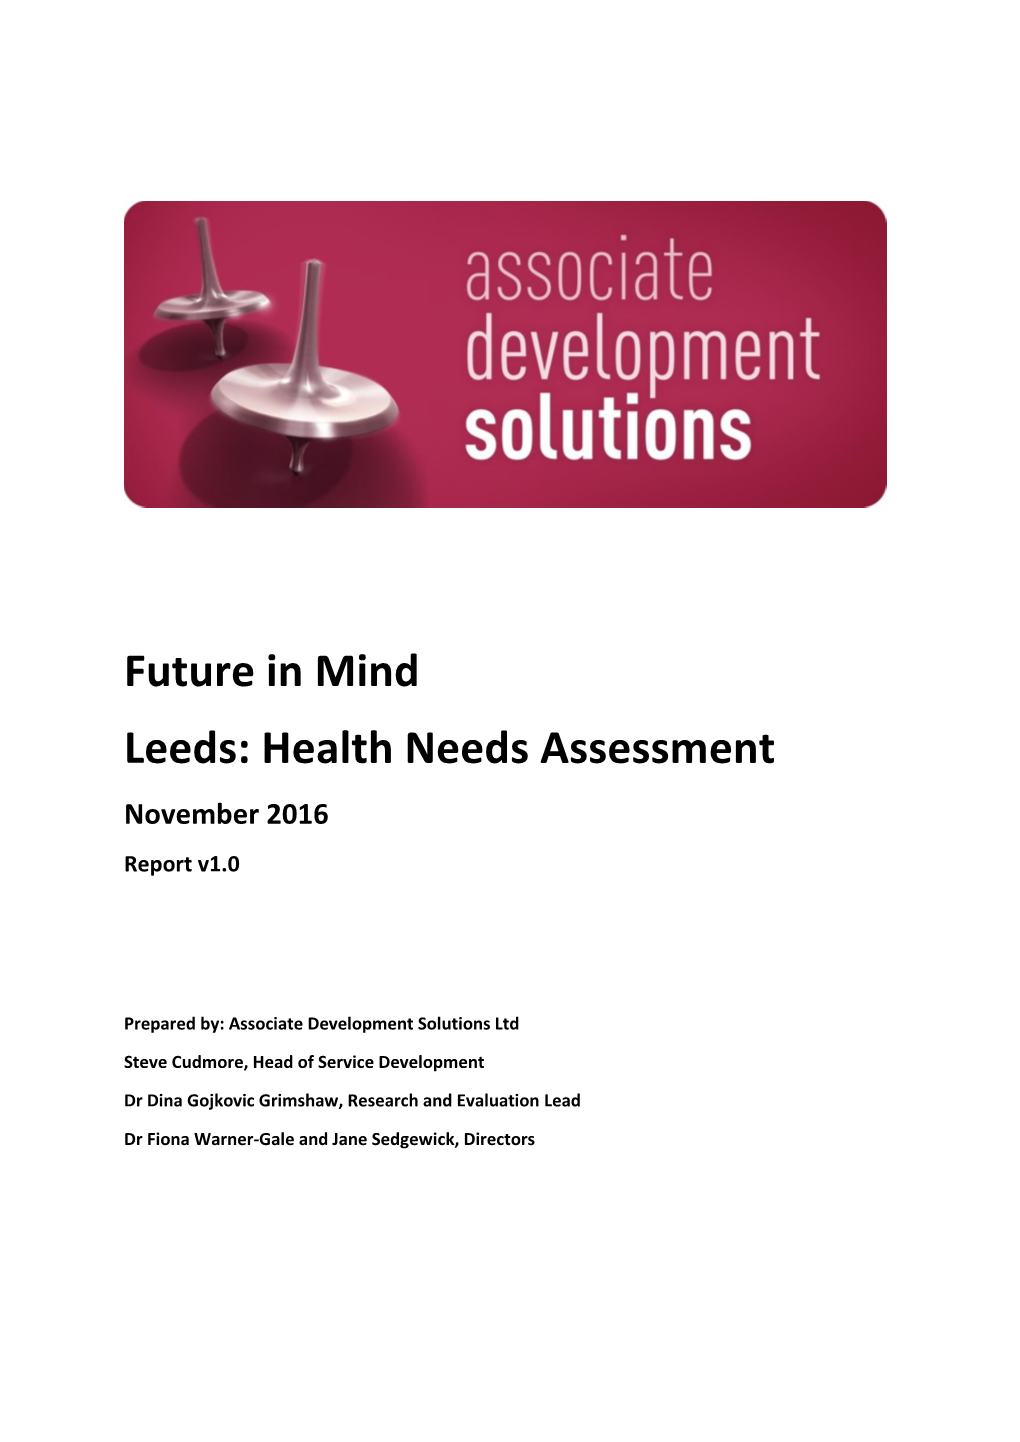 Future in Mind Leeds: Health Needs Assessment November 2016 Report V1.0